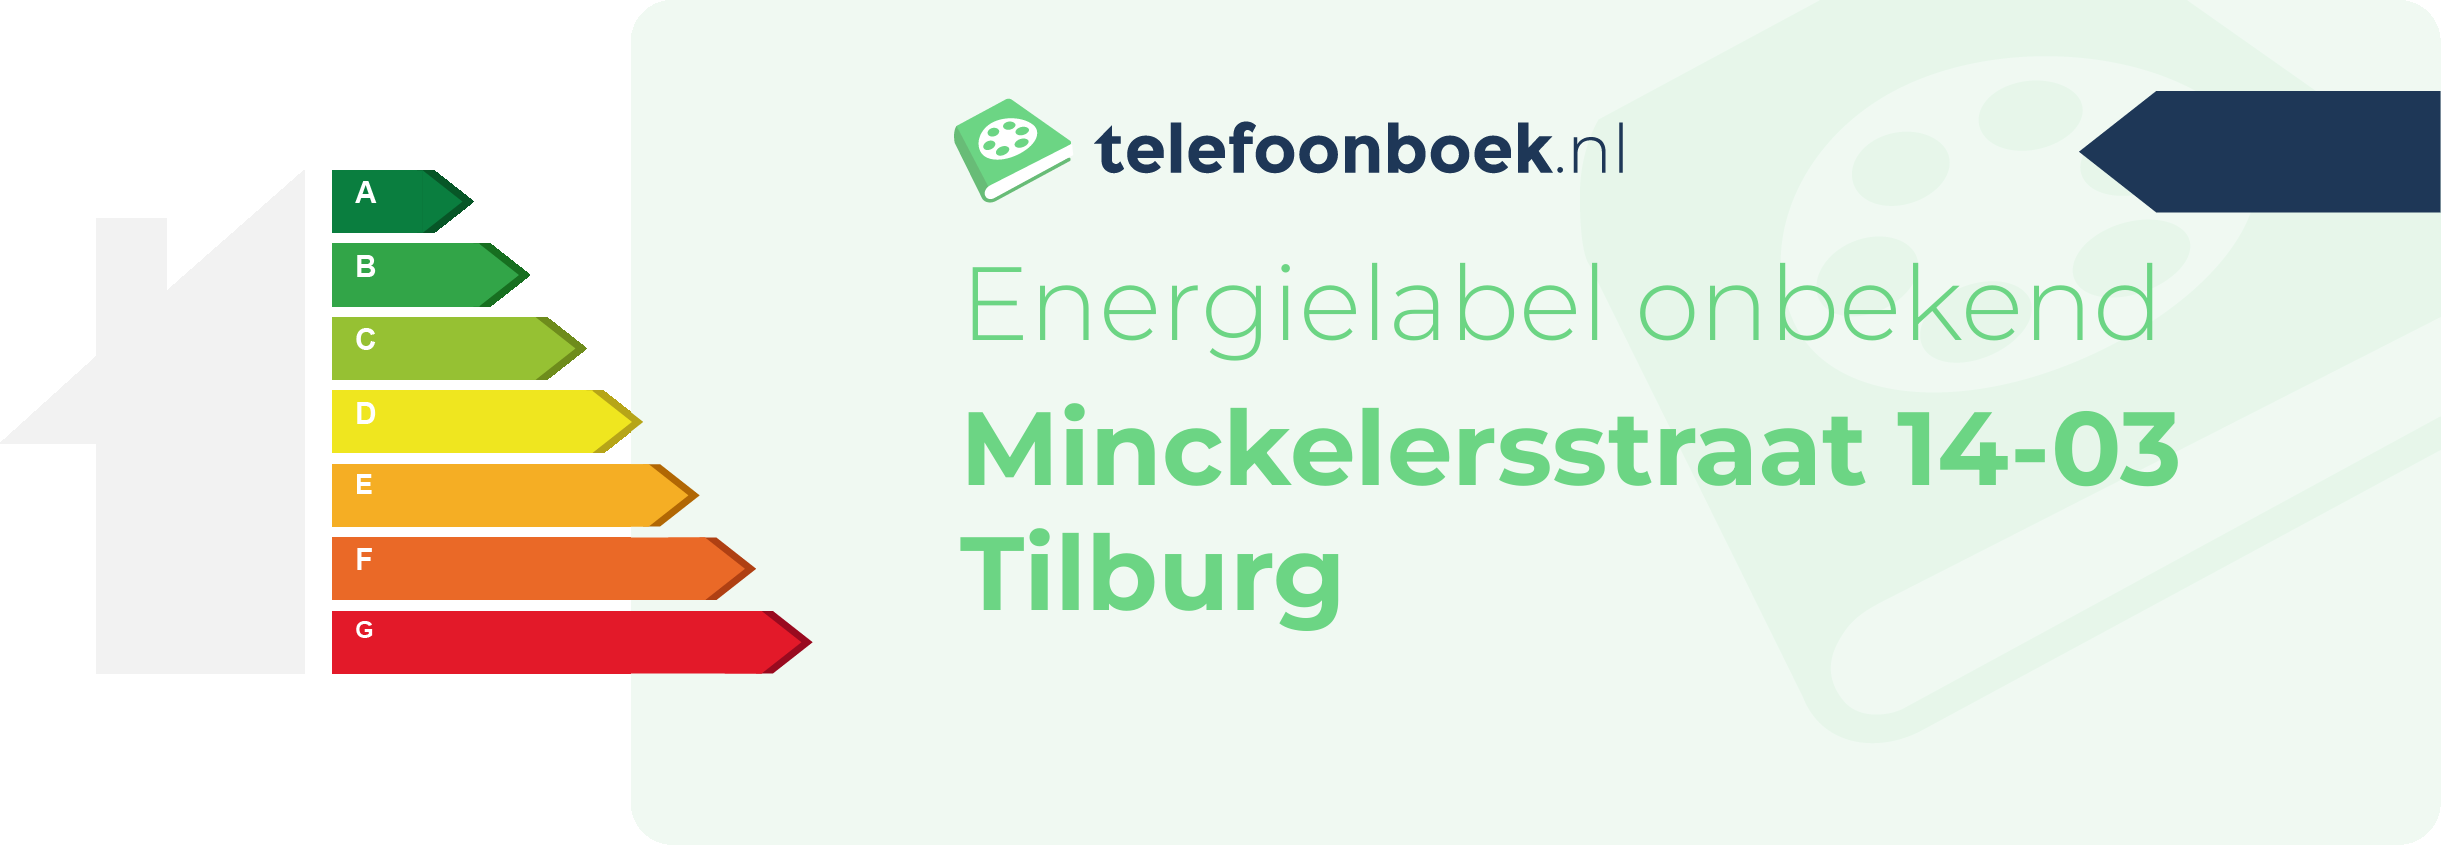 Energielabel Minckelersstraat 14-03 Tilburg